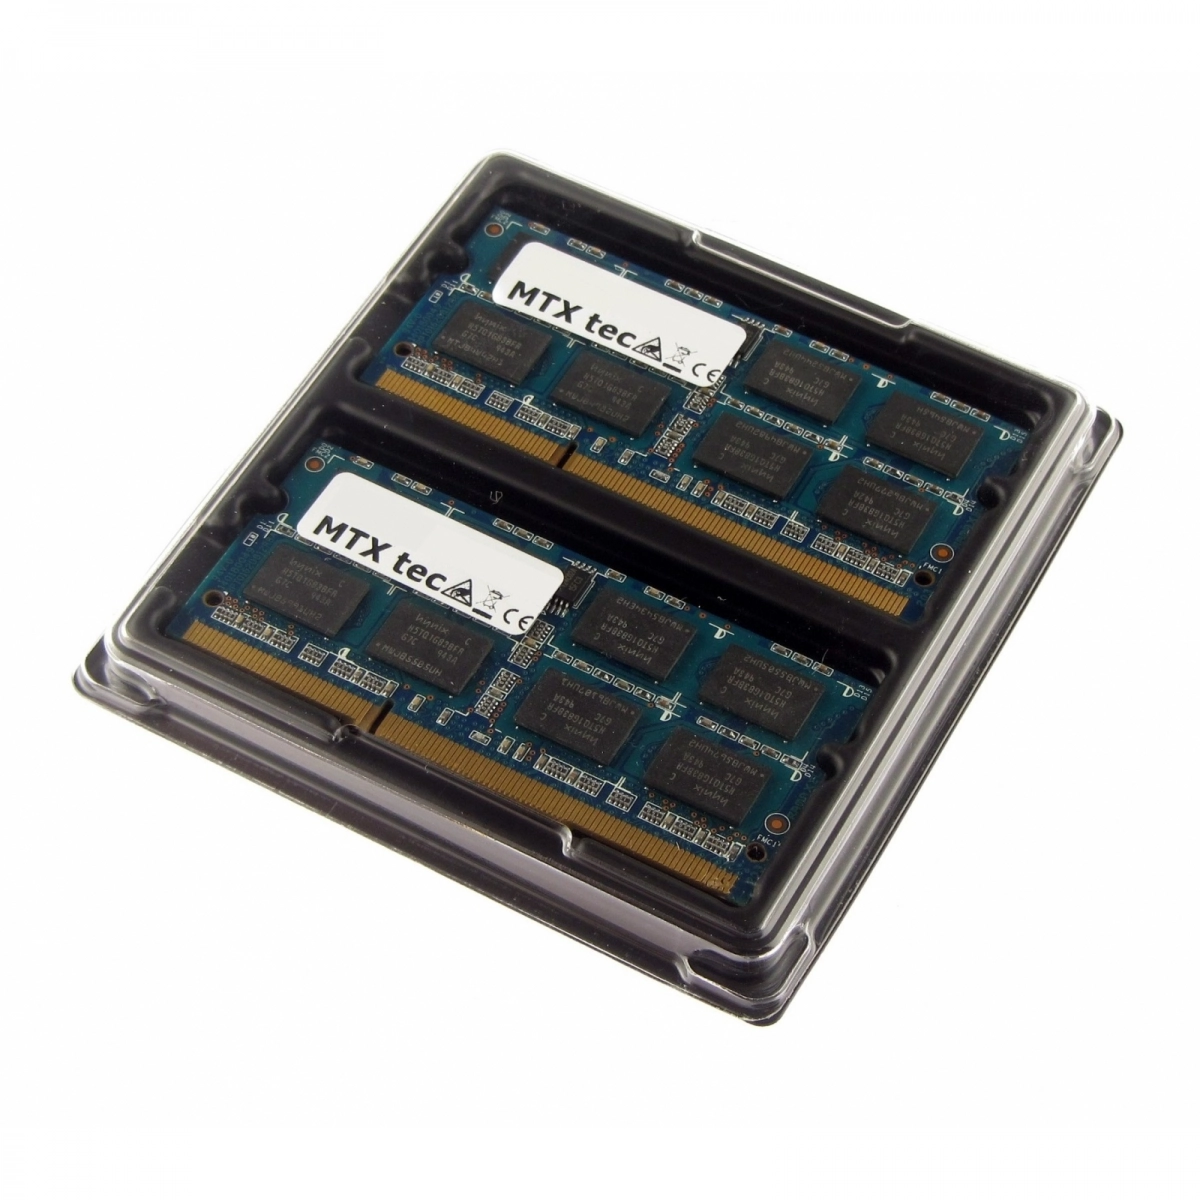 MTXtec 2GB Kit 2x 1GB DDR2 667MHz SODIMM DDR2 PC2-5300, 200 Pin RAM Laptop-Speicher